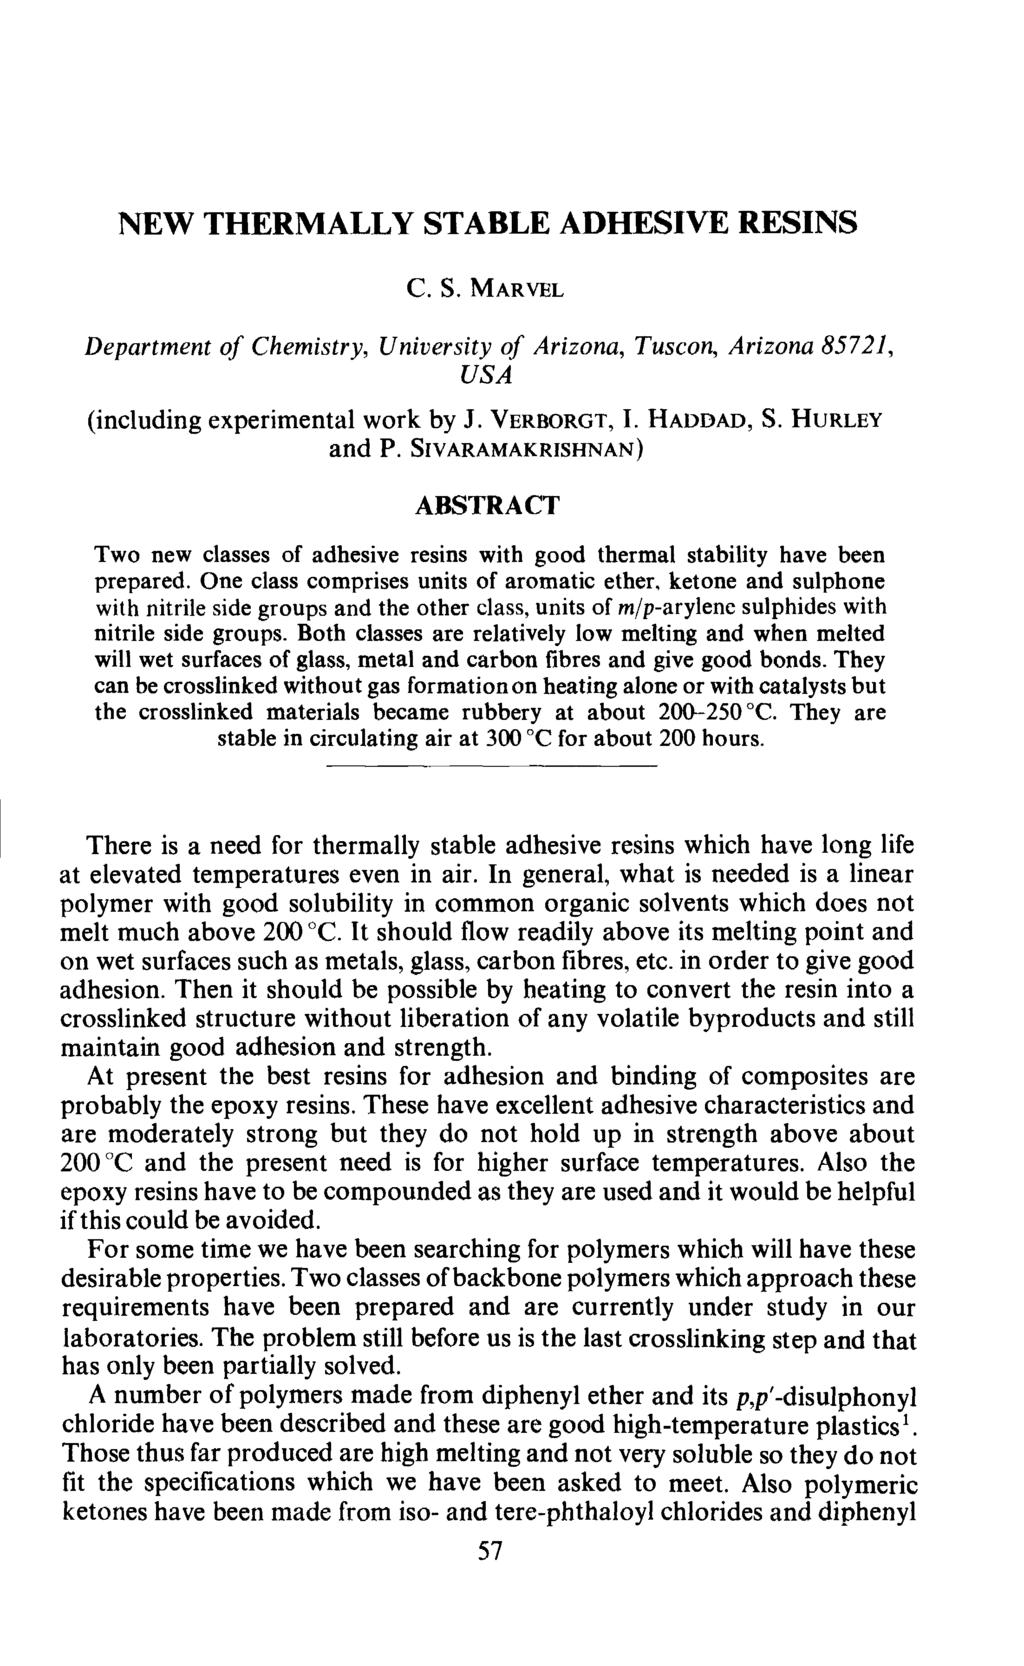 Department of Chemistry, University of Arizona, Tuscon, Arizona 85721, USA (including experimental work by J. VERBORGT, I. HADDAD, S. HURLEY and P.